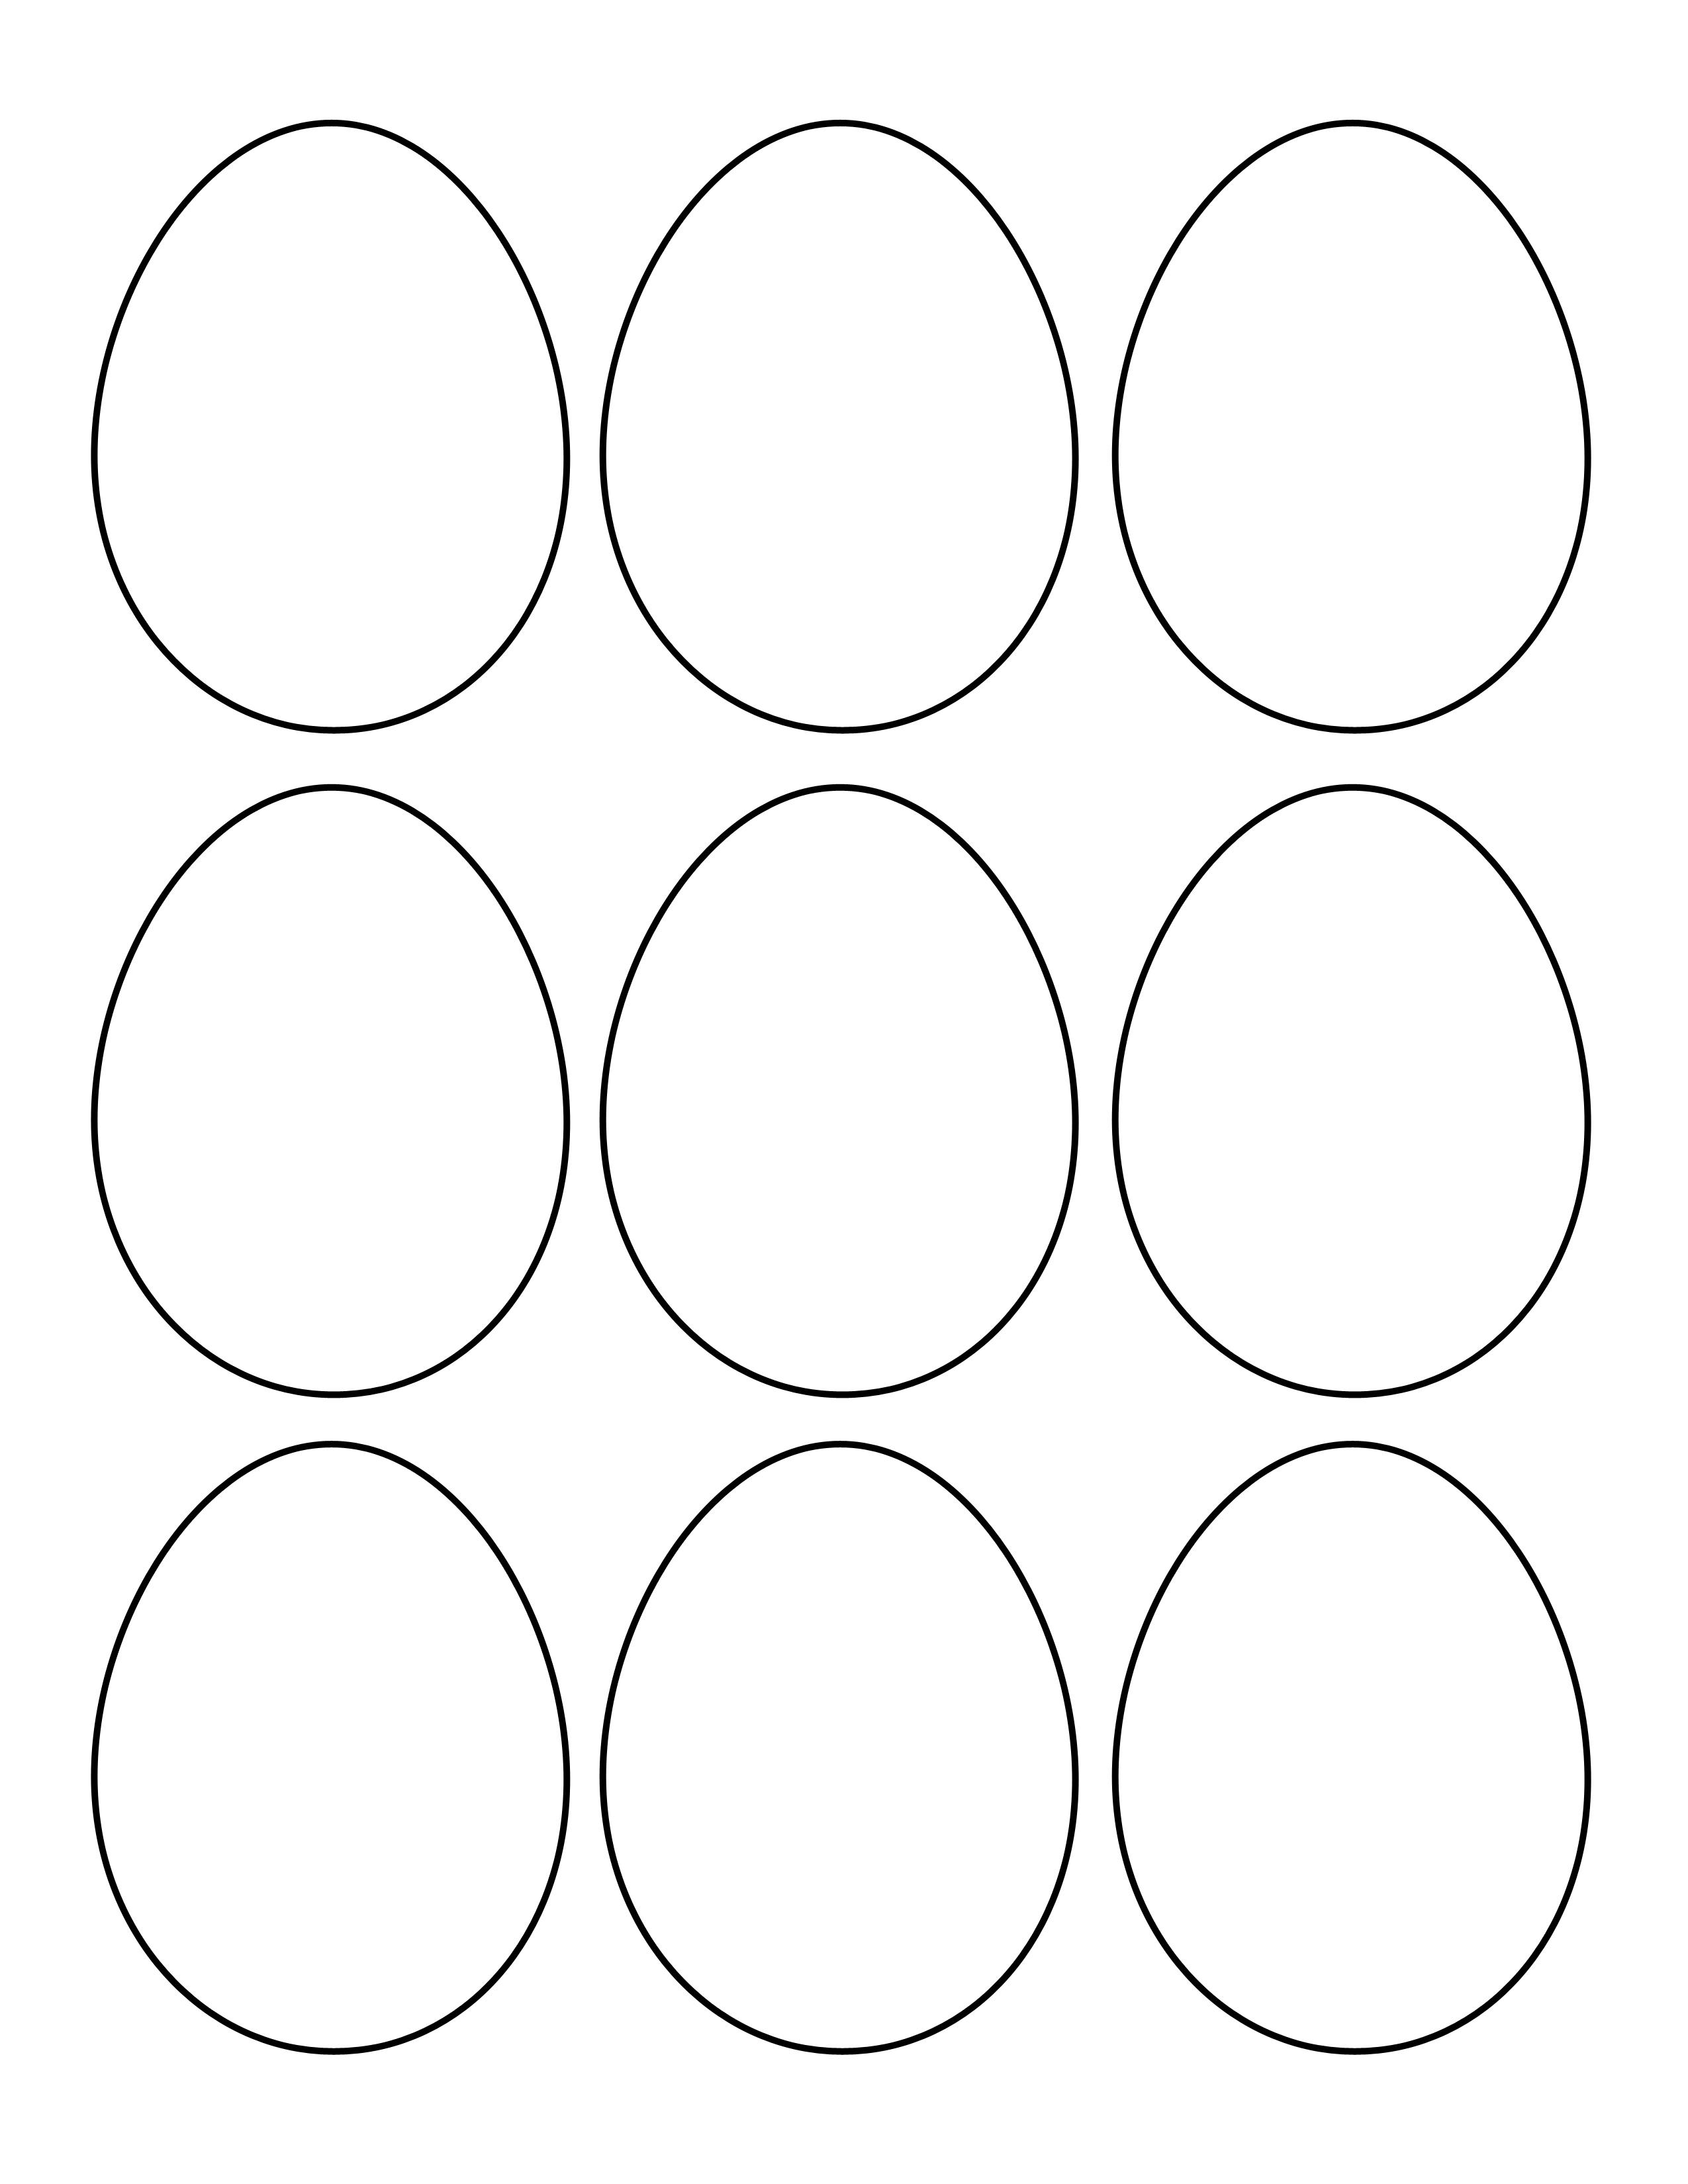 Free Printable Easter Egg Templates – Hd Easter Images - Easter Egg Template Free Printable